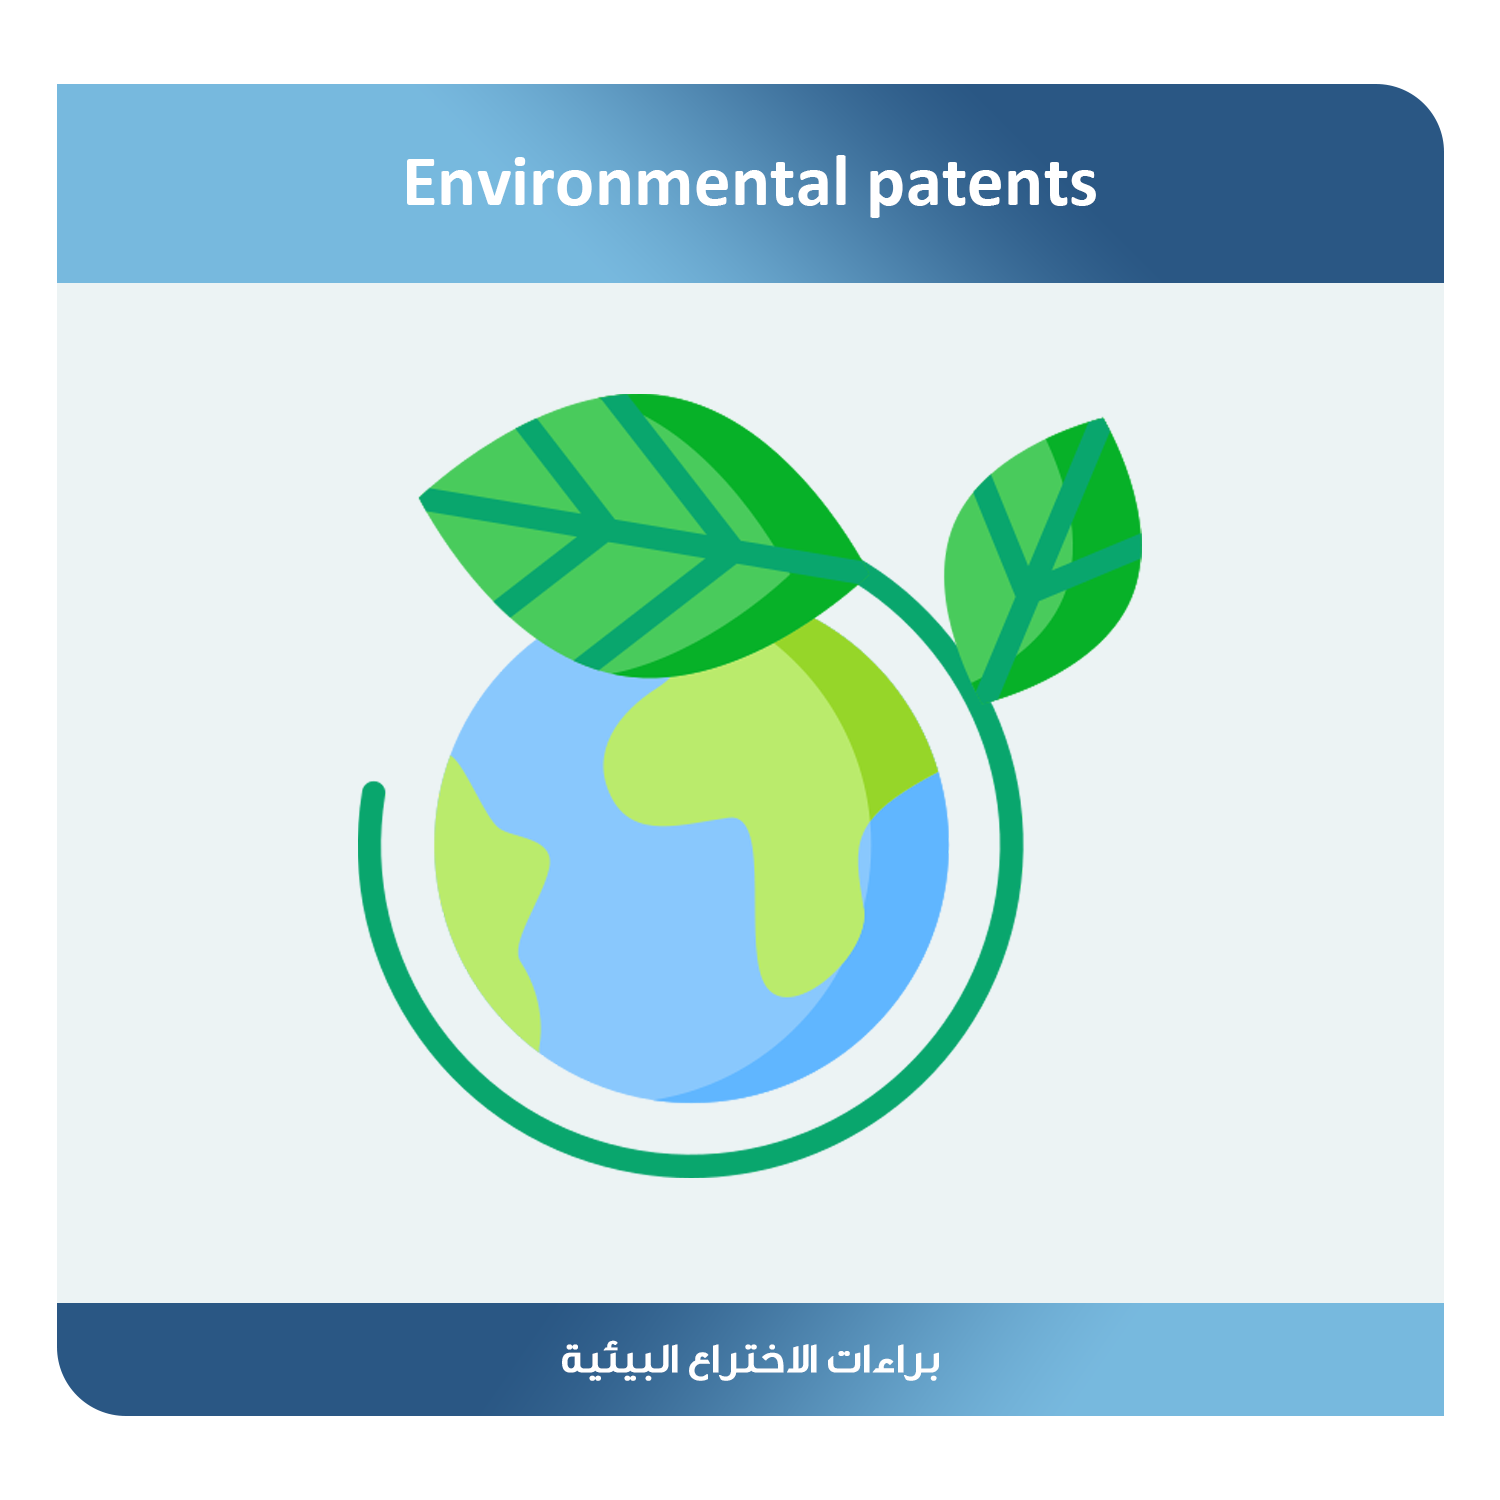 Environmental patents